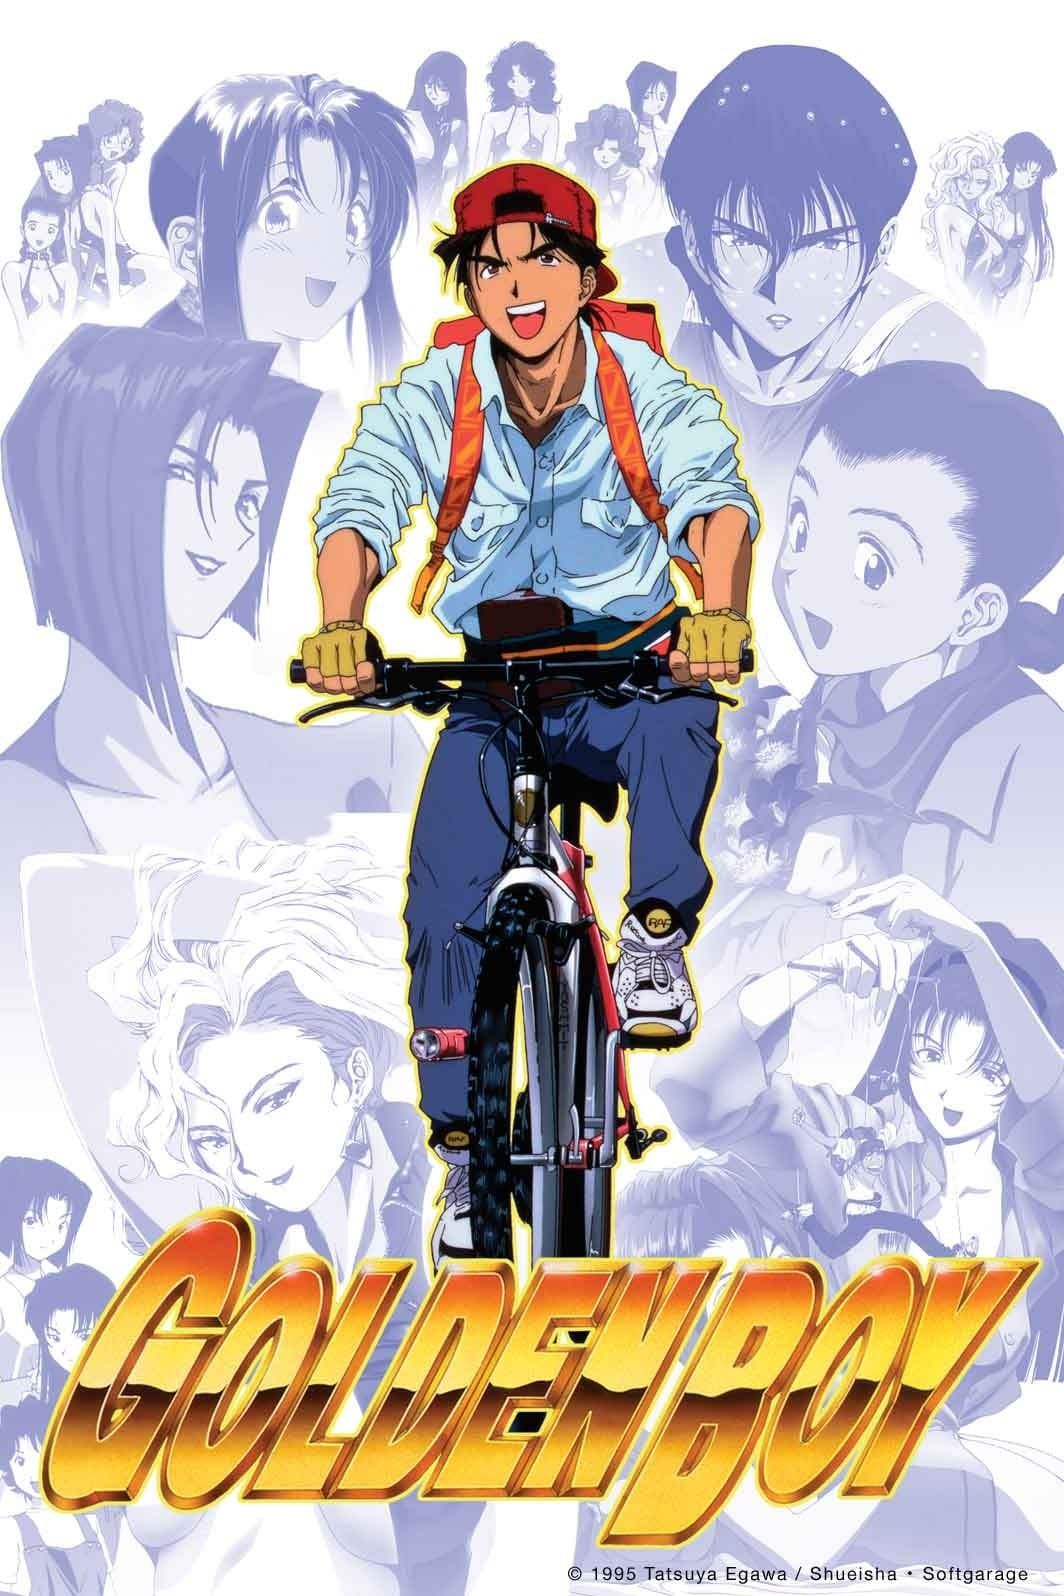 [Comedy] Golden Boy (Dub) (OVA) Color Version